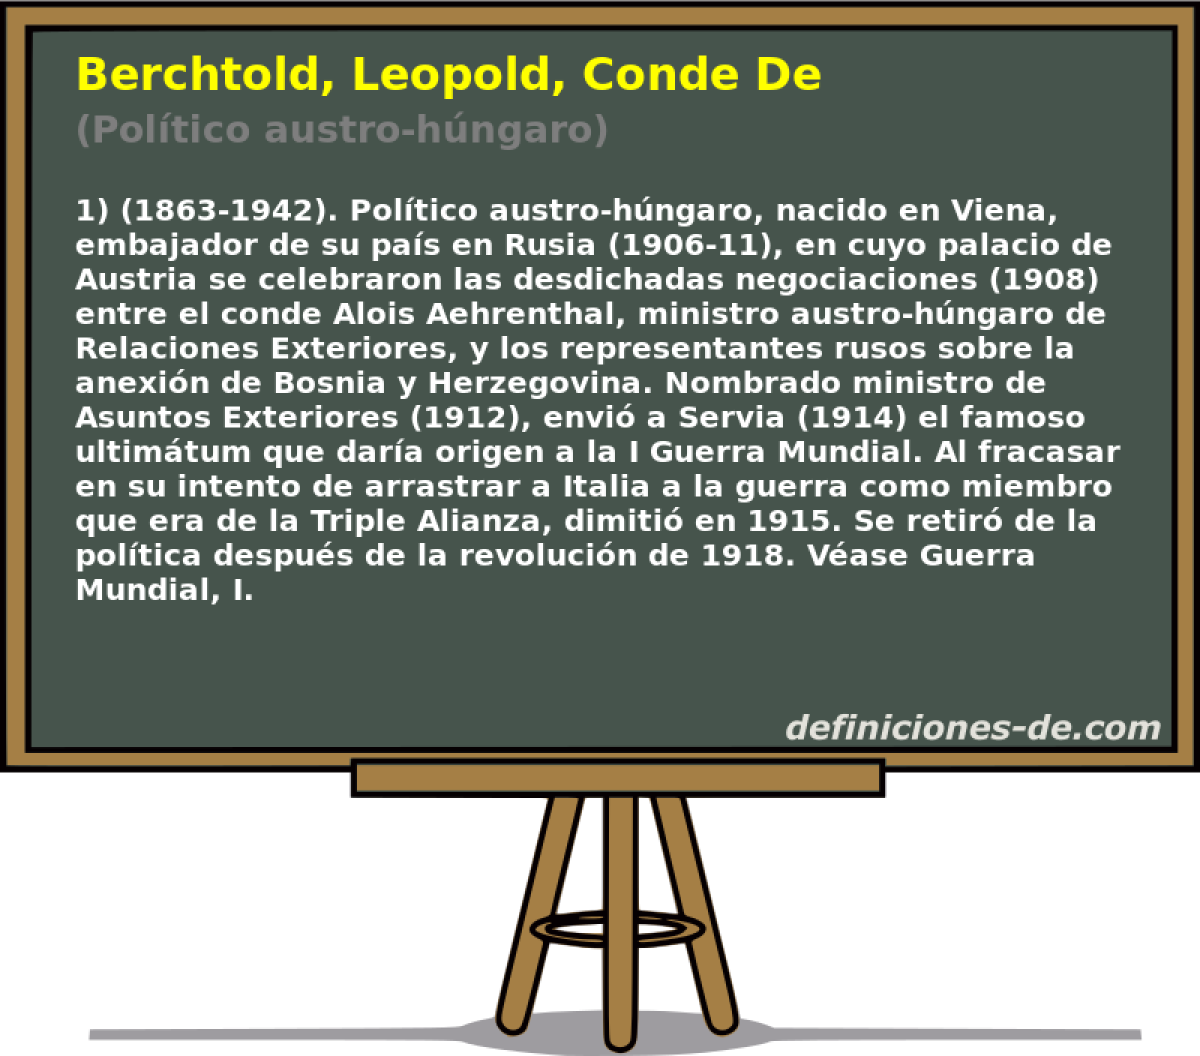 Berchtold, Leopold, Conde De (Poltico austro-hngaro)